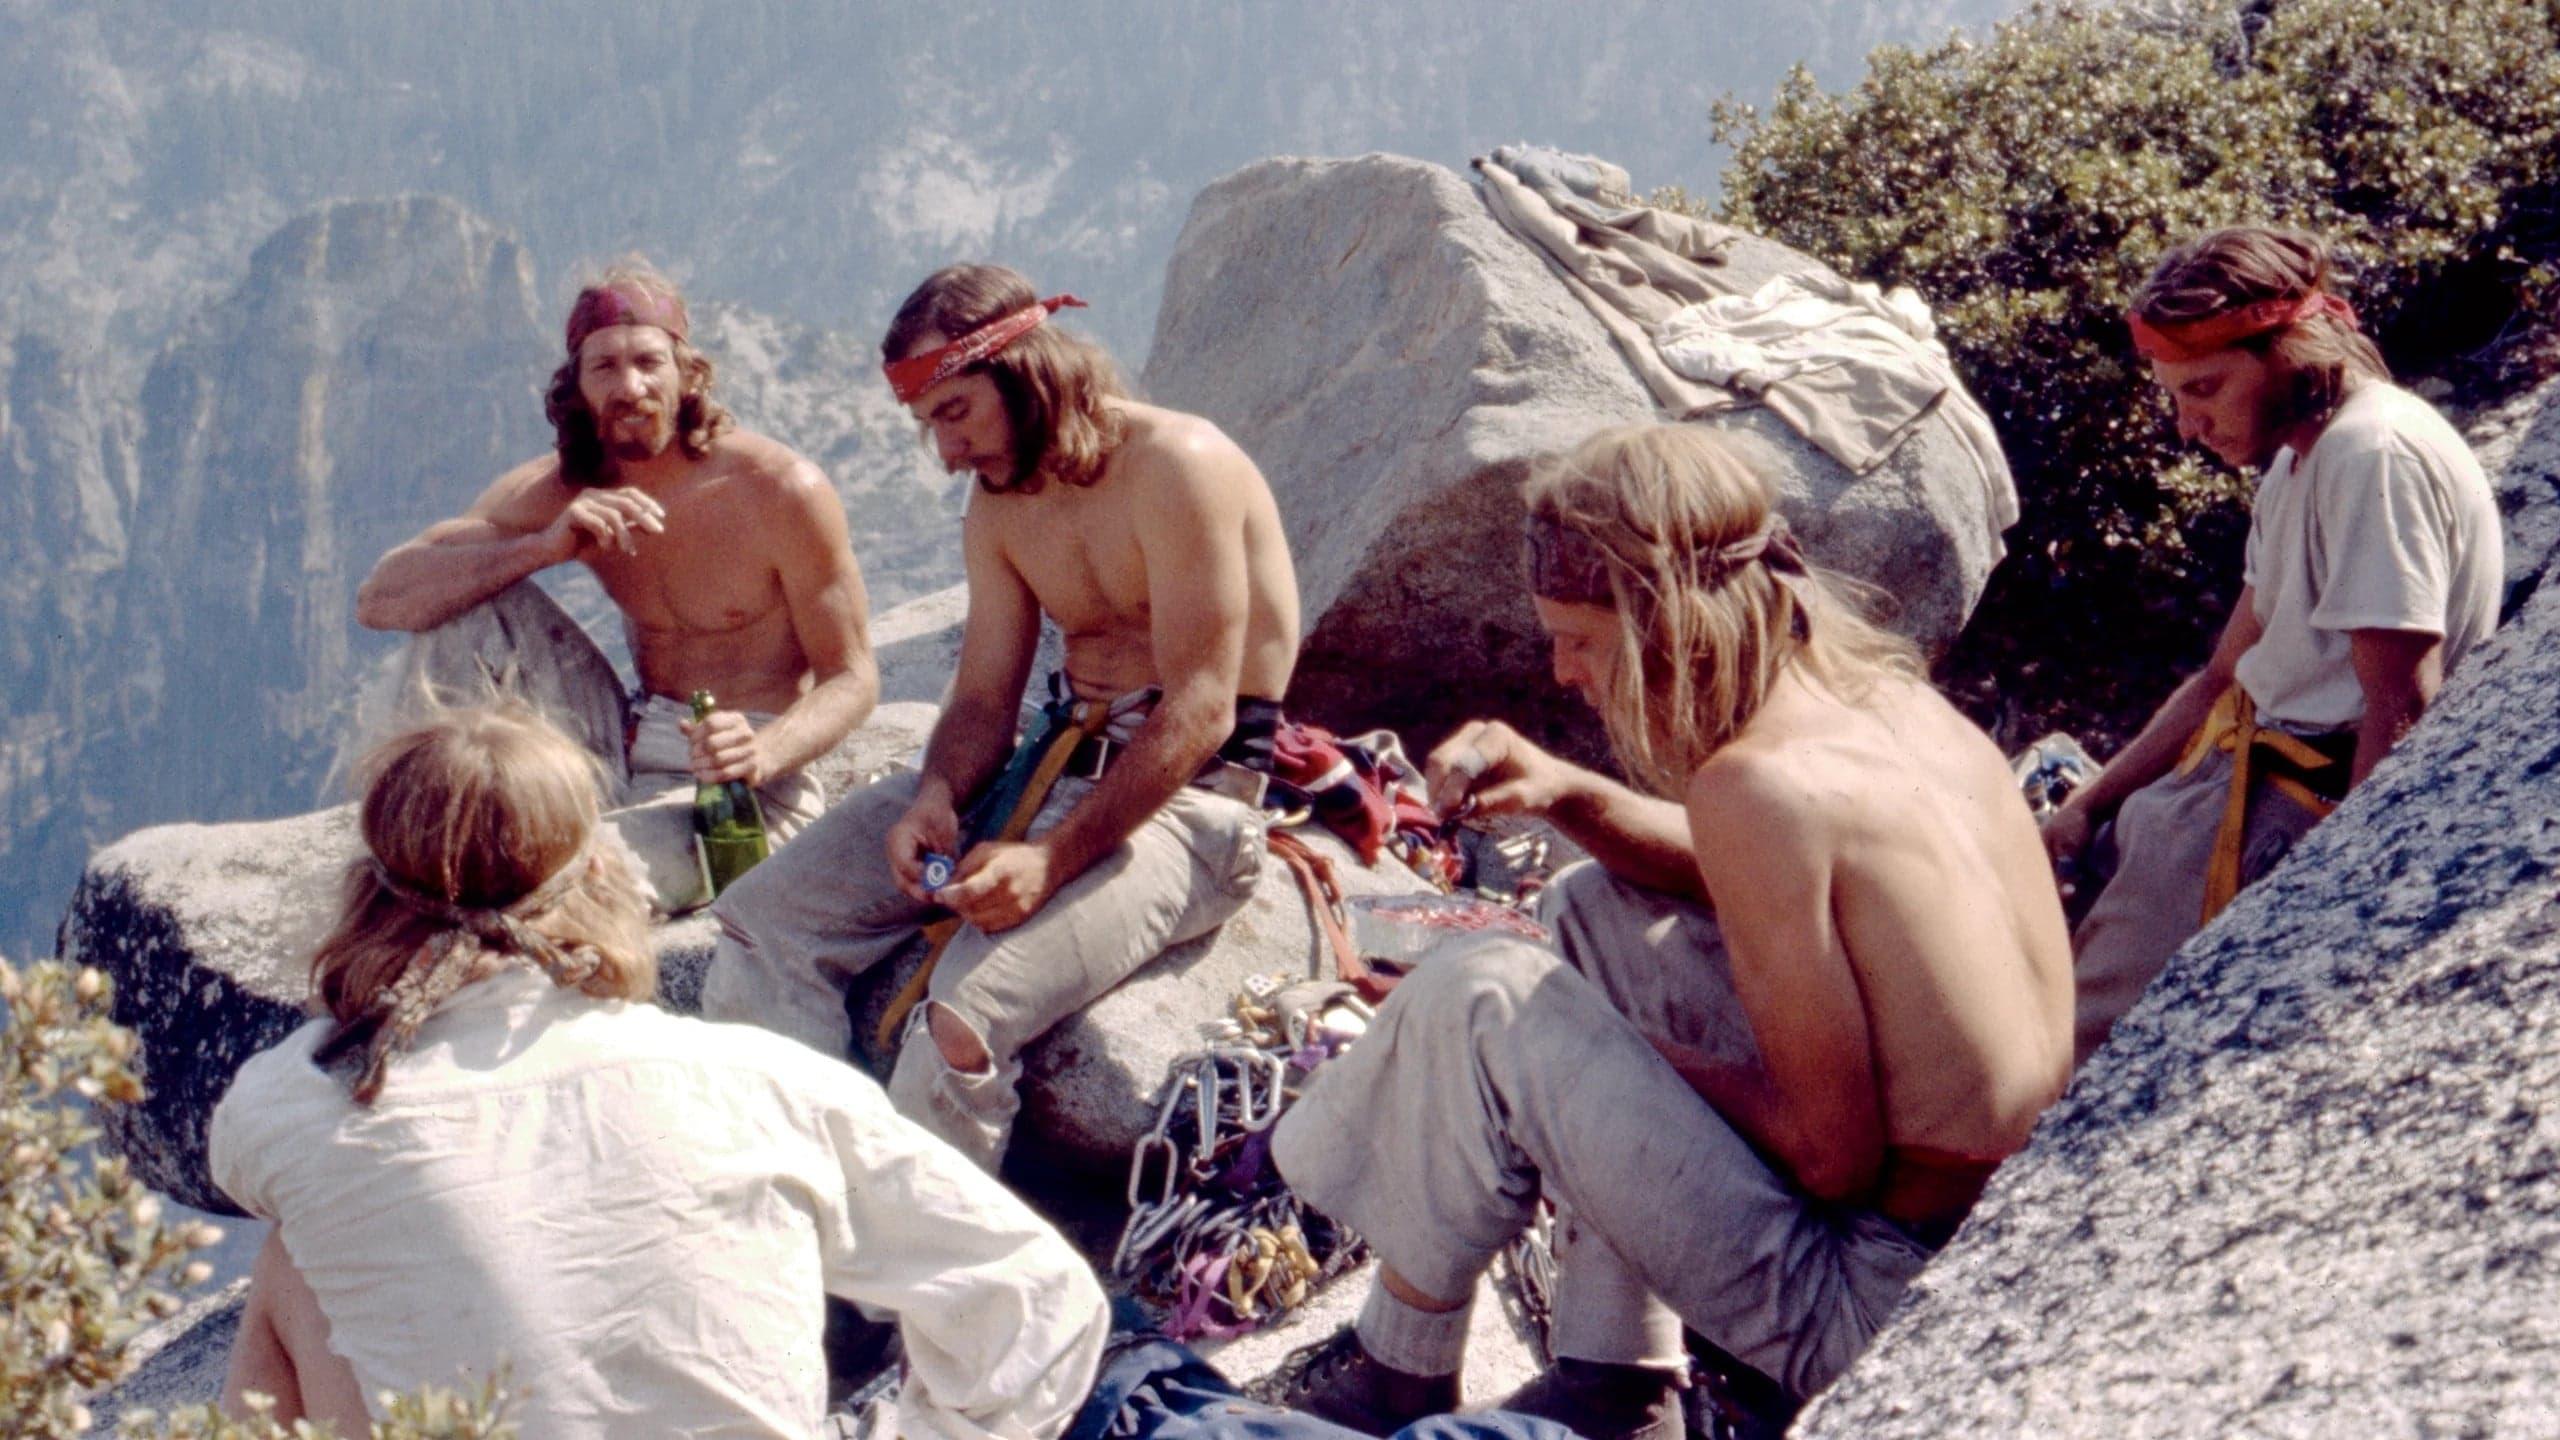 Jim Bridwell, The Yosemite Living Legend backdrop